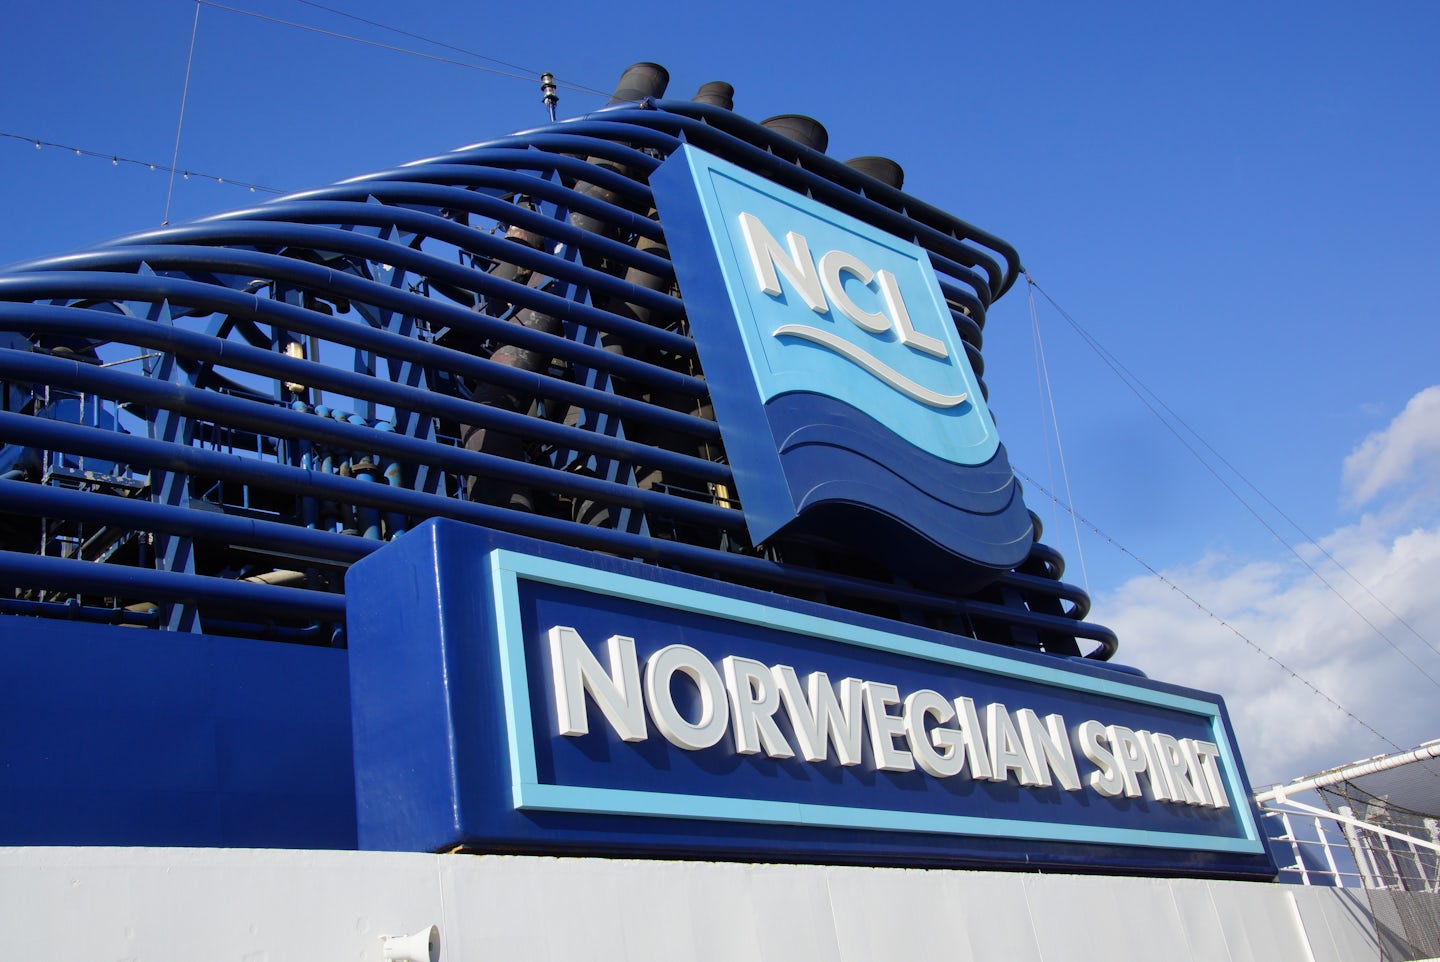 NCL Norwegian Spirit